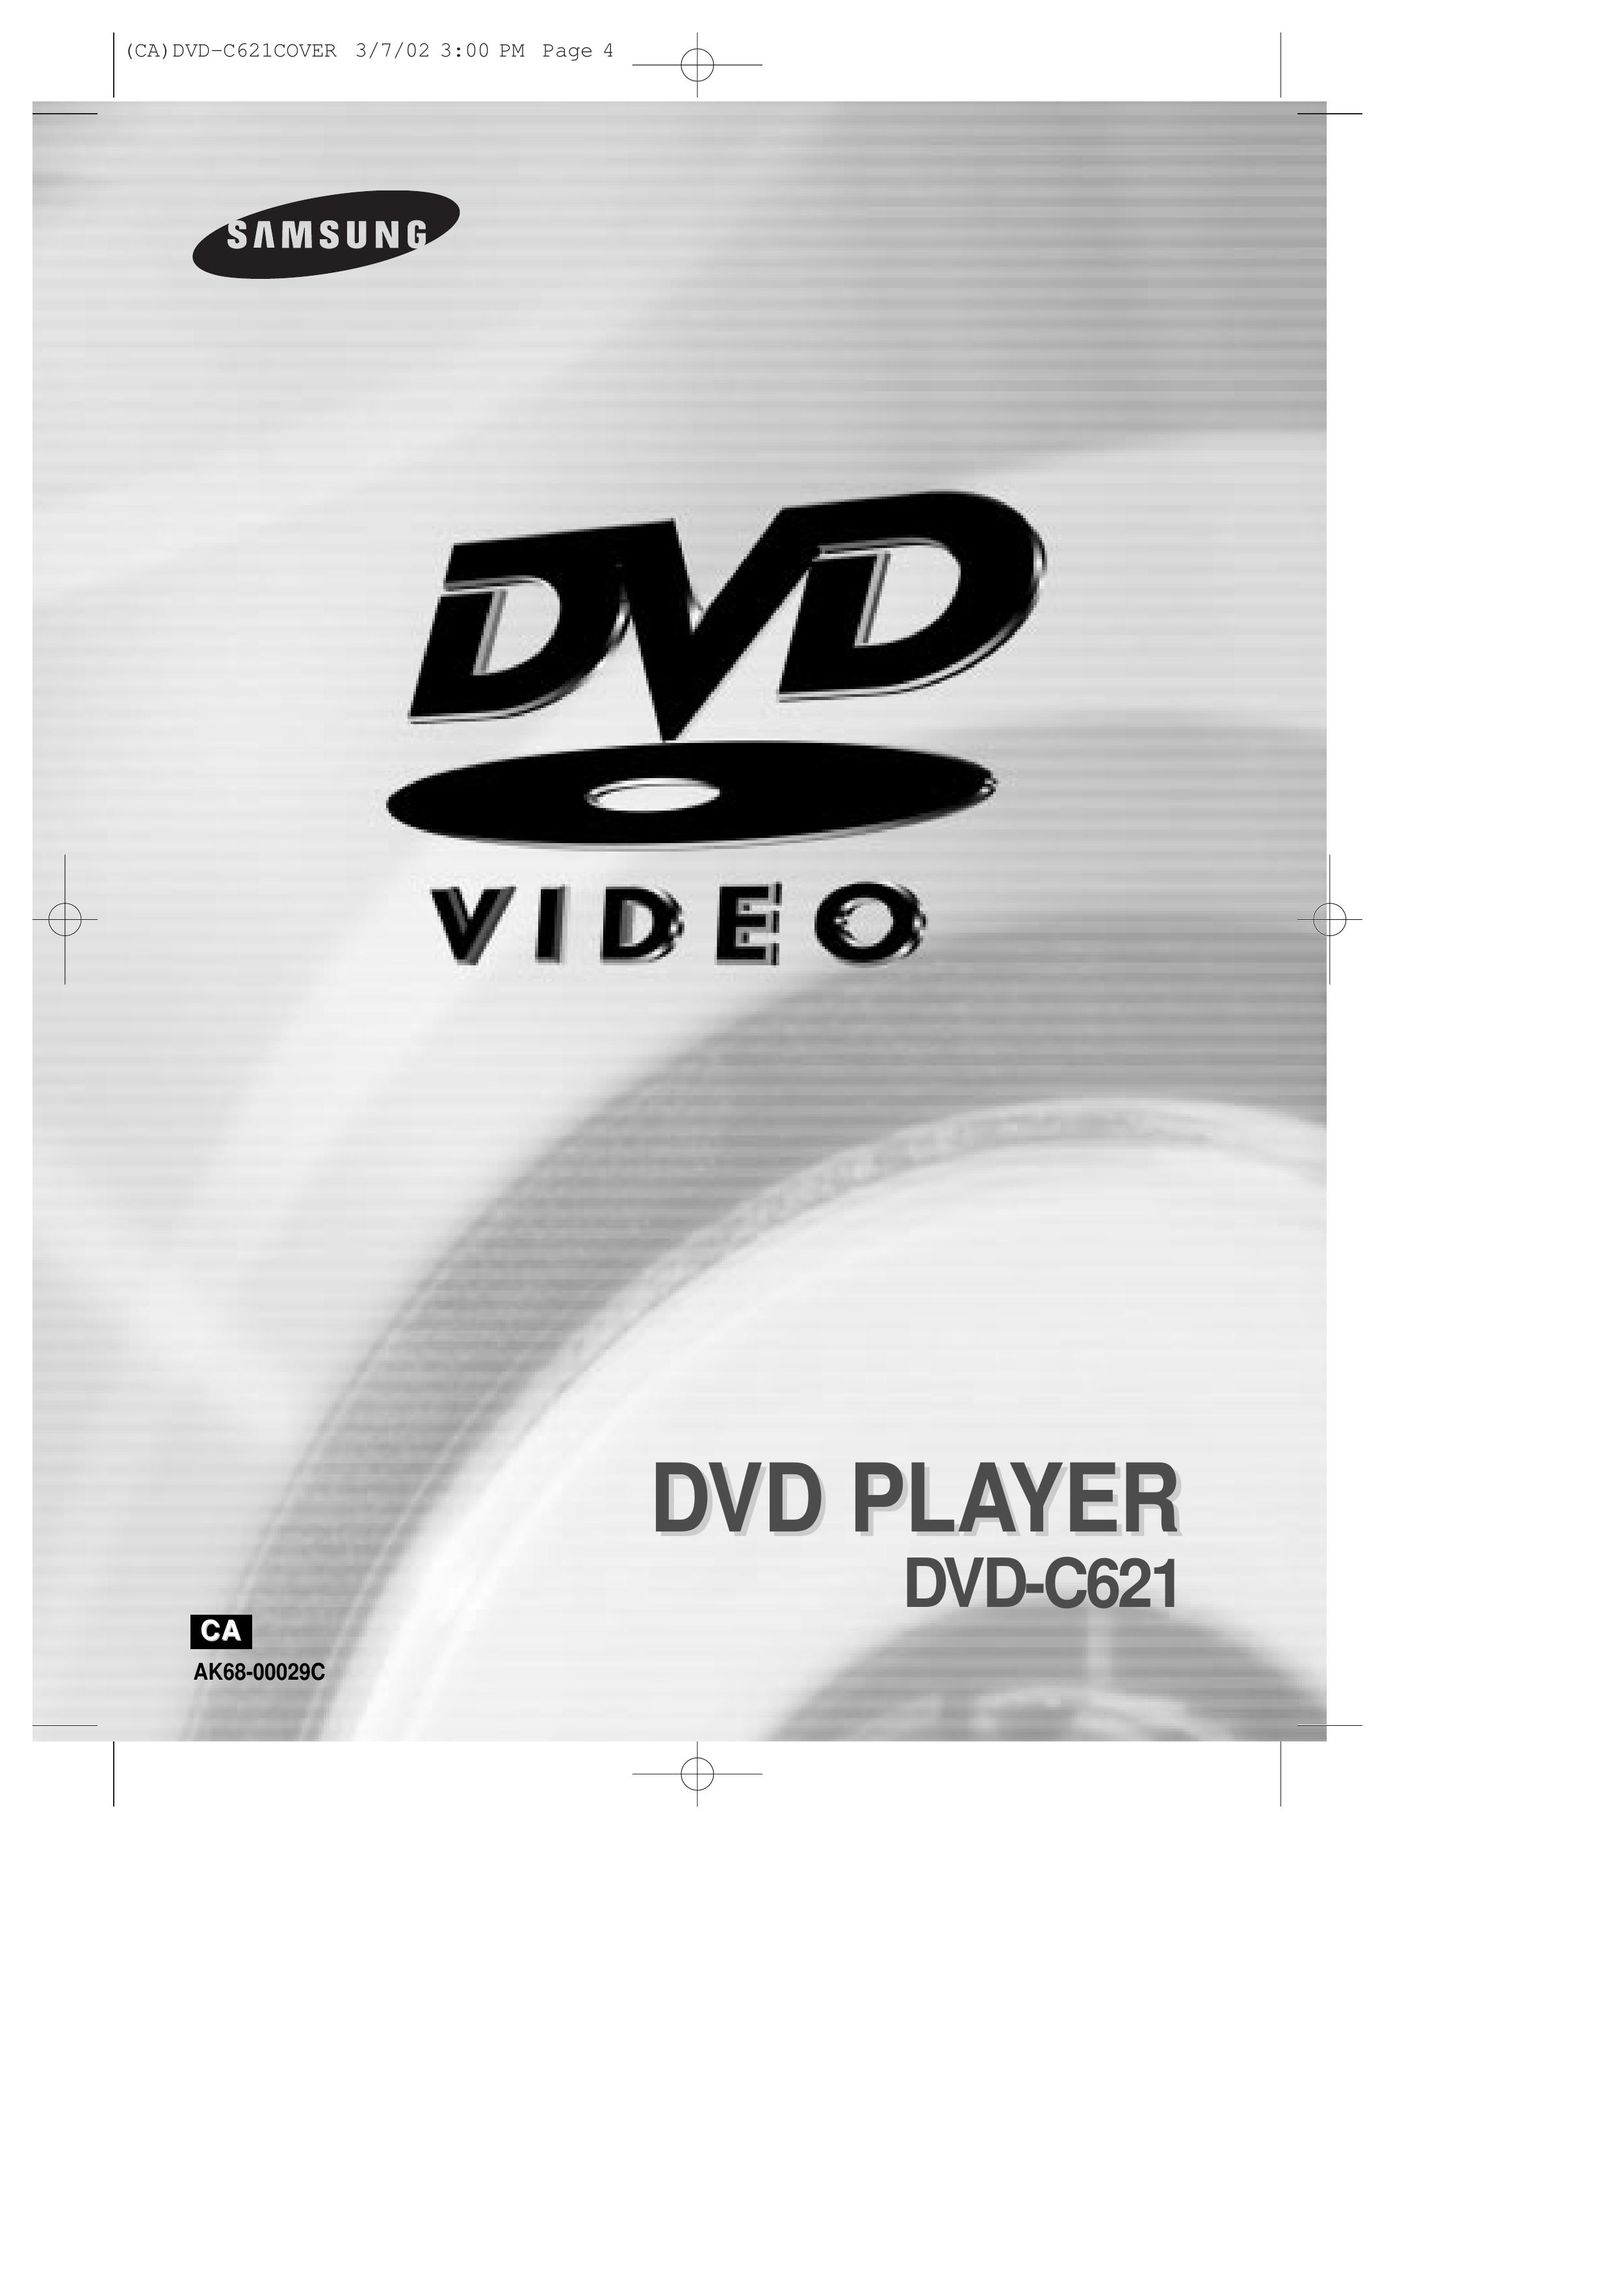 Samsung 20030516154437687 DVD Player User Manual